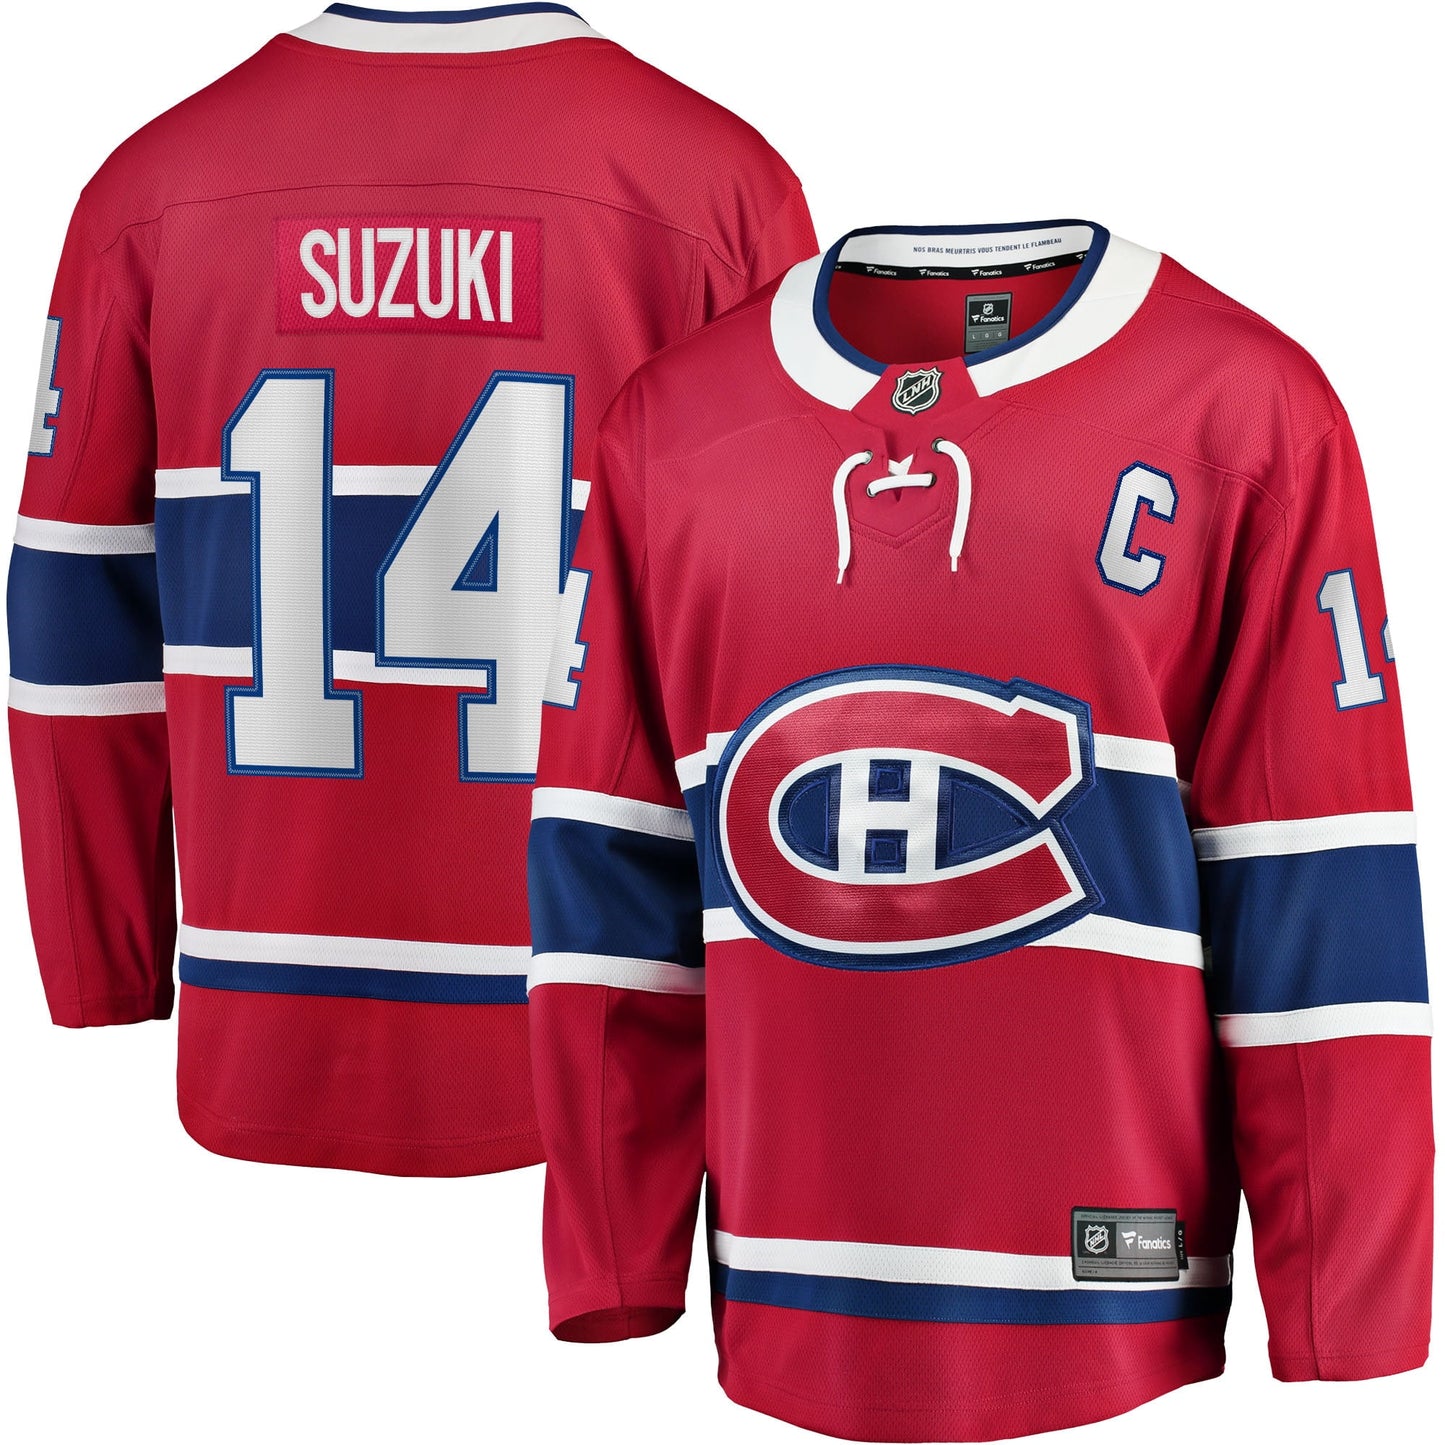 Men's Fanatics Branded Nick Suzuki Red Montreal Canadiens Home Captain Patch Breakaway Player Jersey